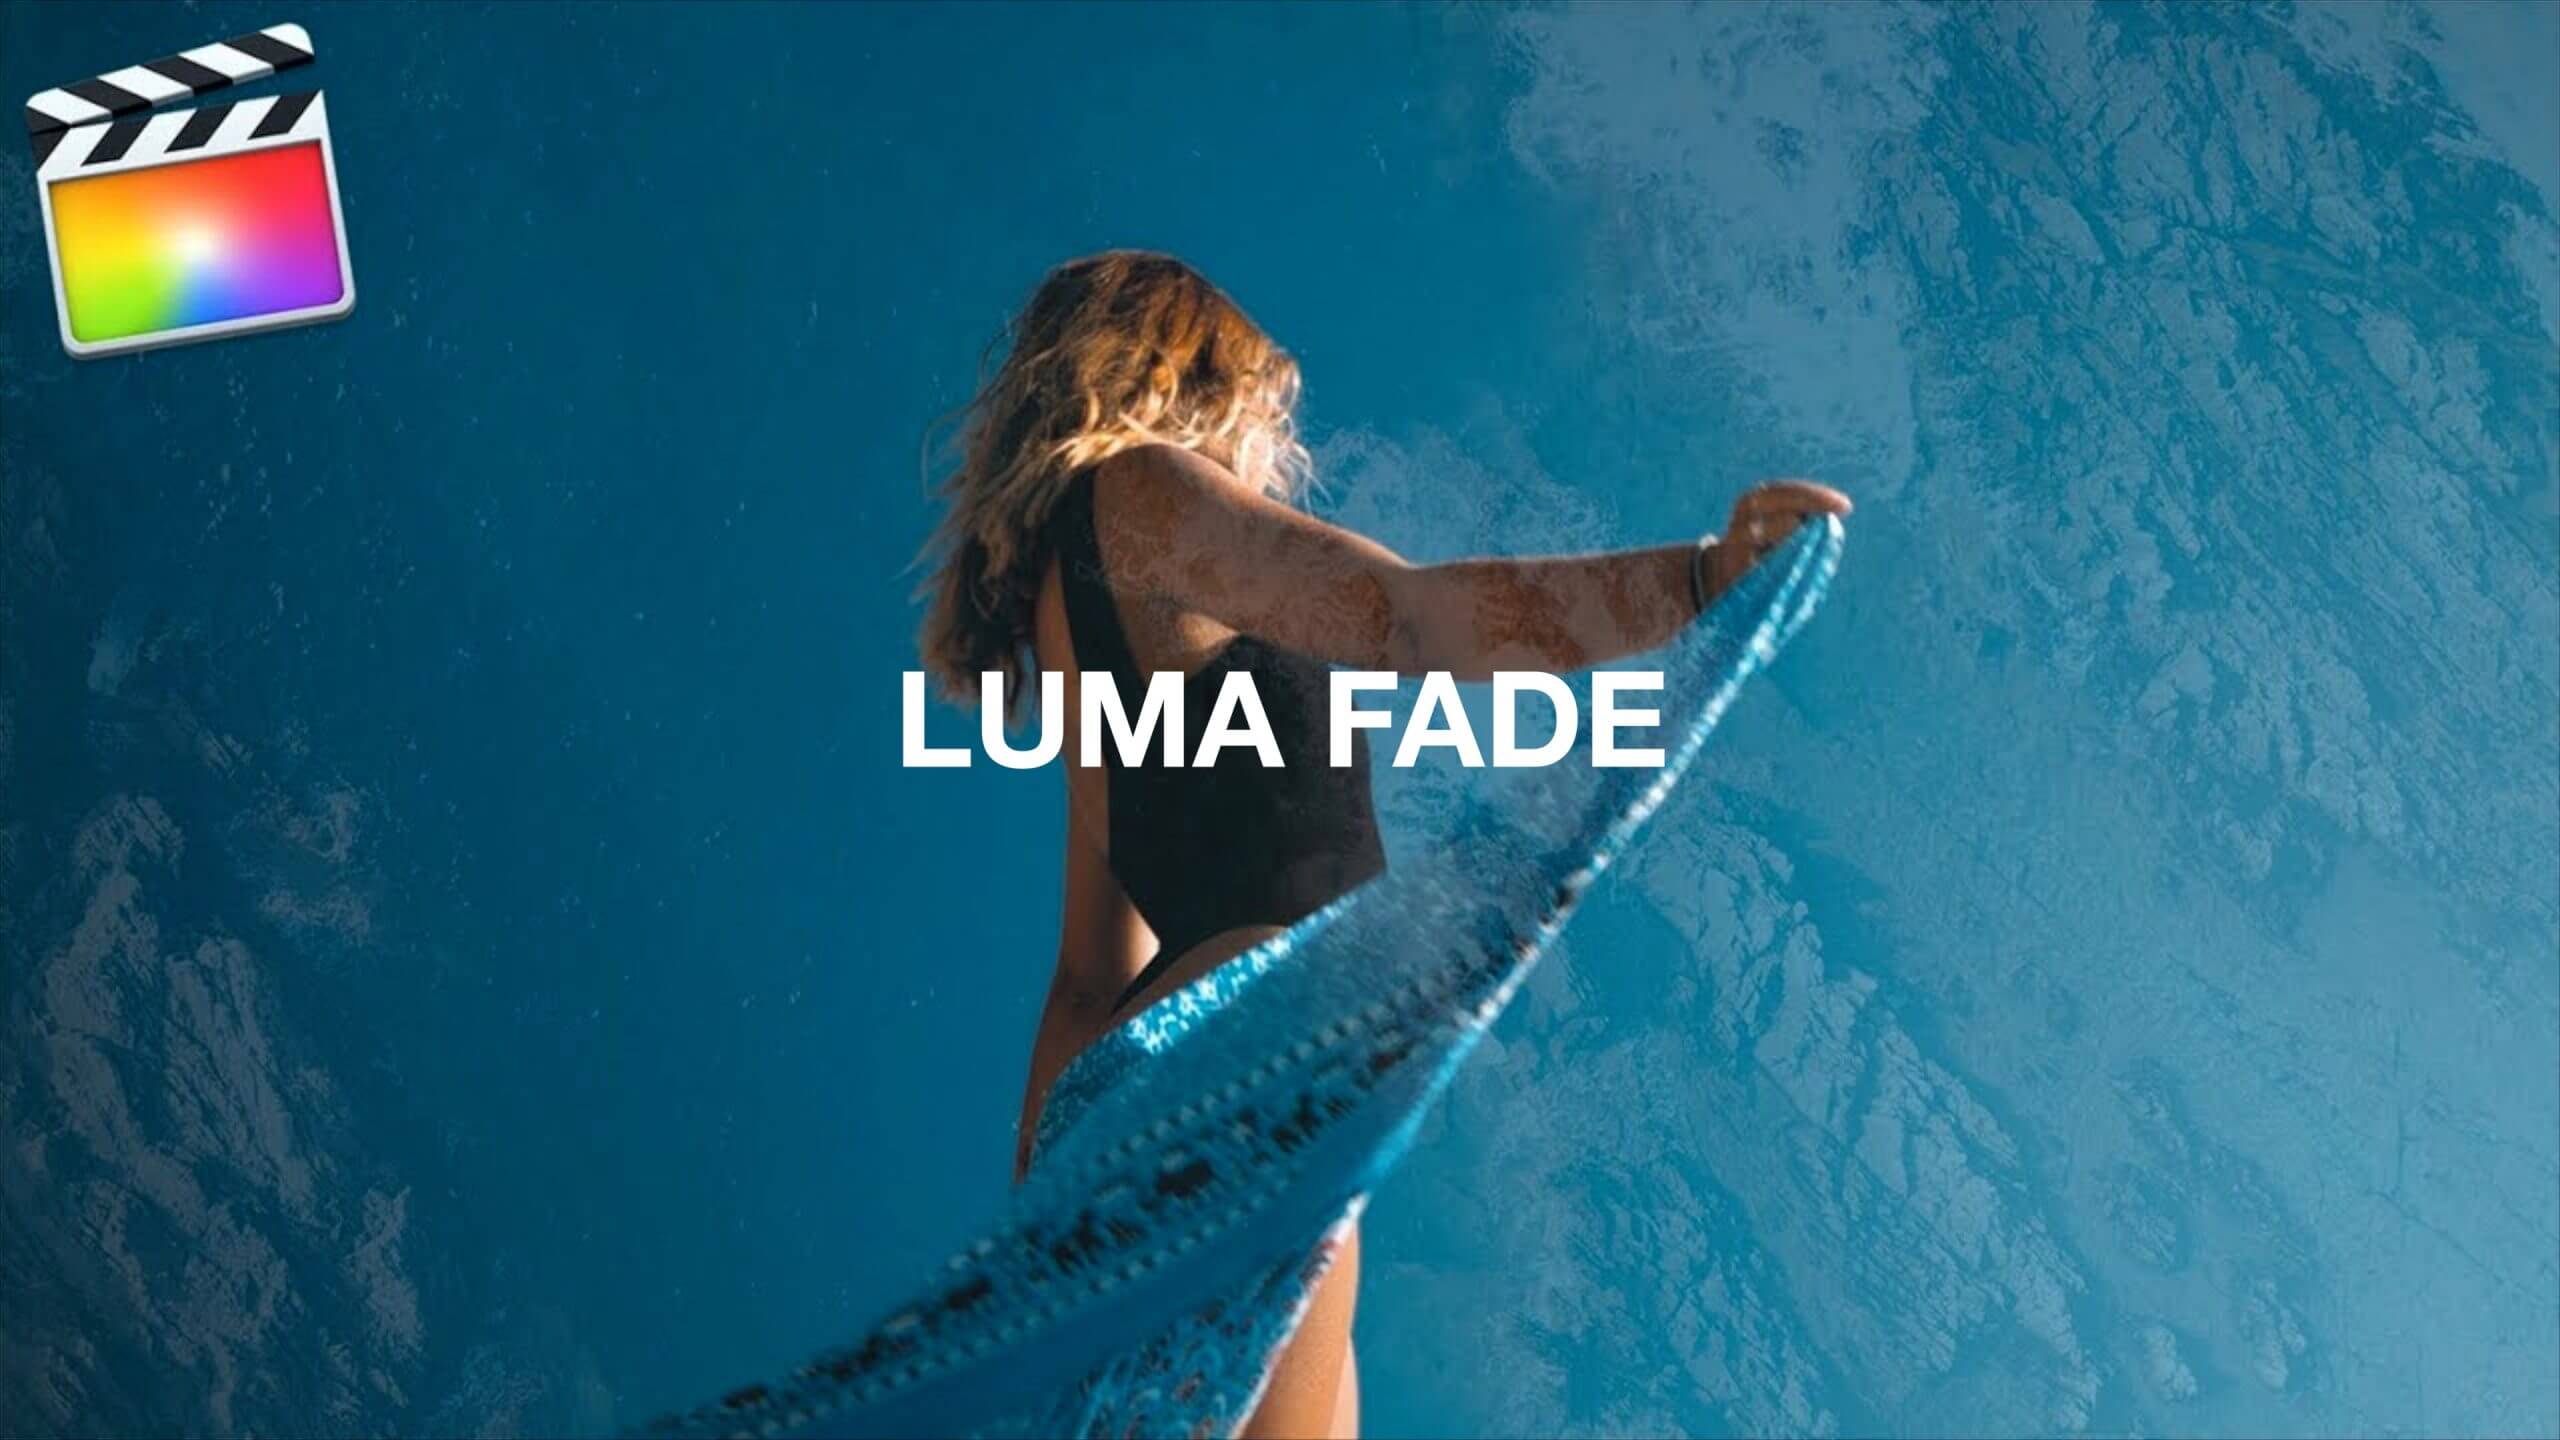 Final Cut Pro X ルマフェードトランジション「Luma Fade Transition」の方法